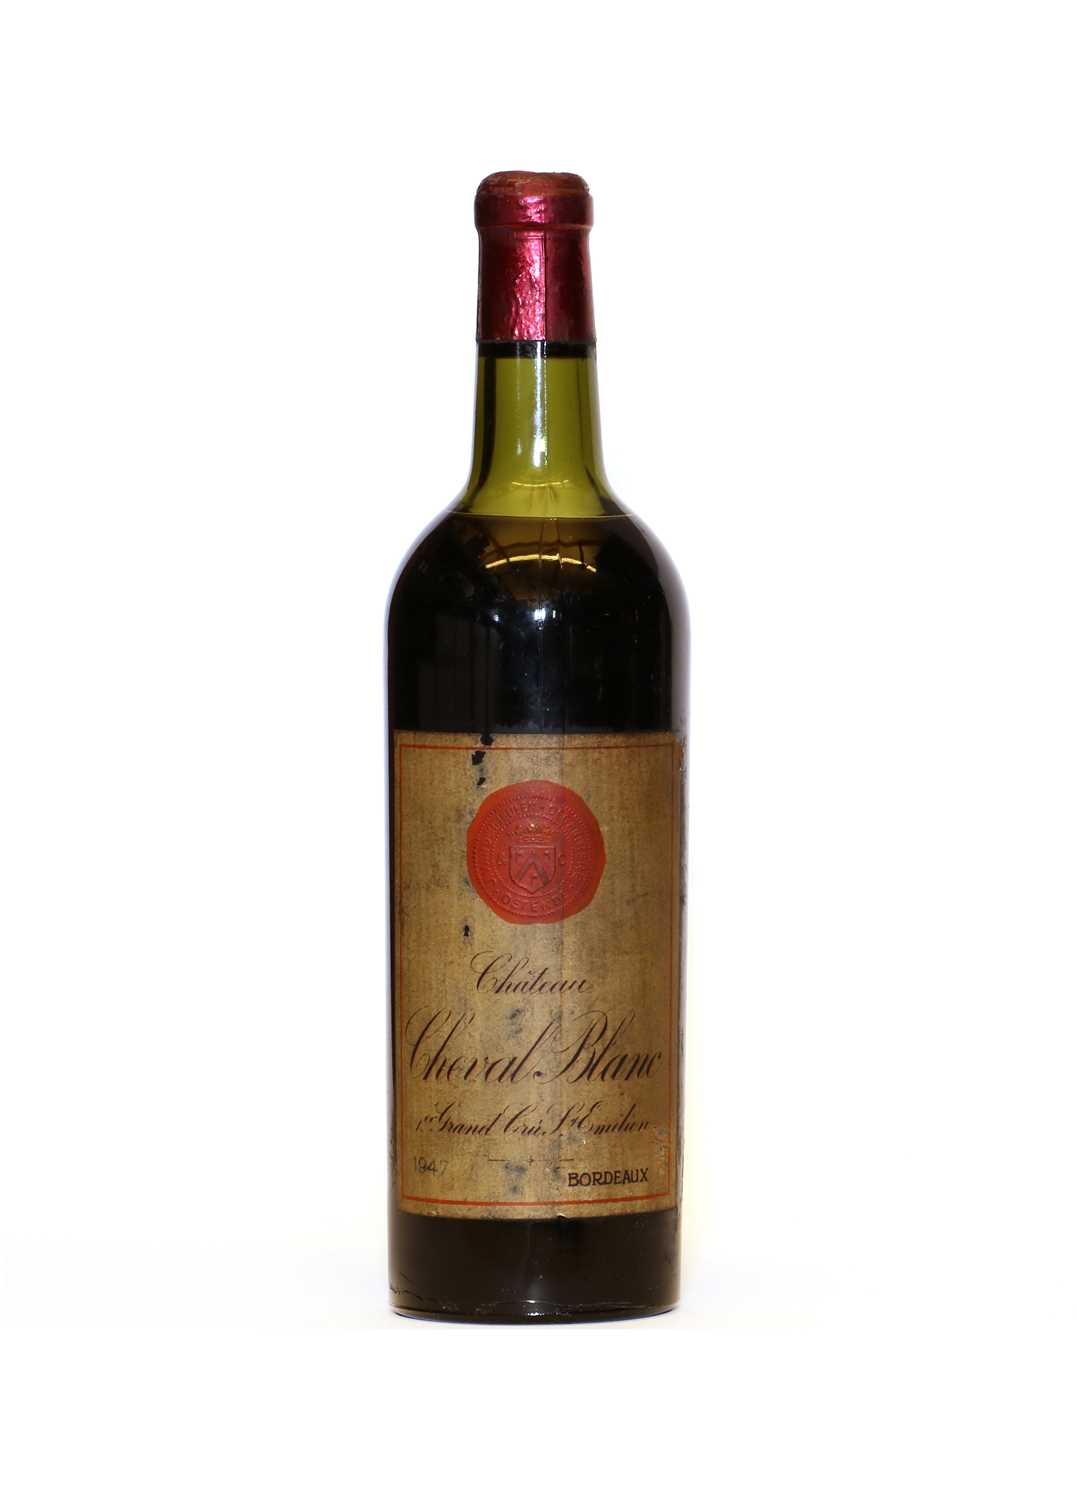 Chateau Cheval Blanc, Saint Emilion 1er Grand Cru Classe, 1947, one bottle